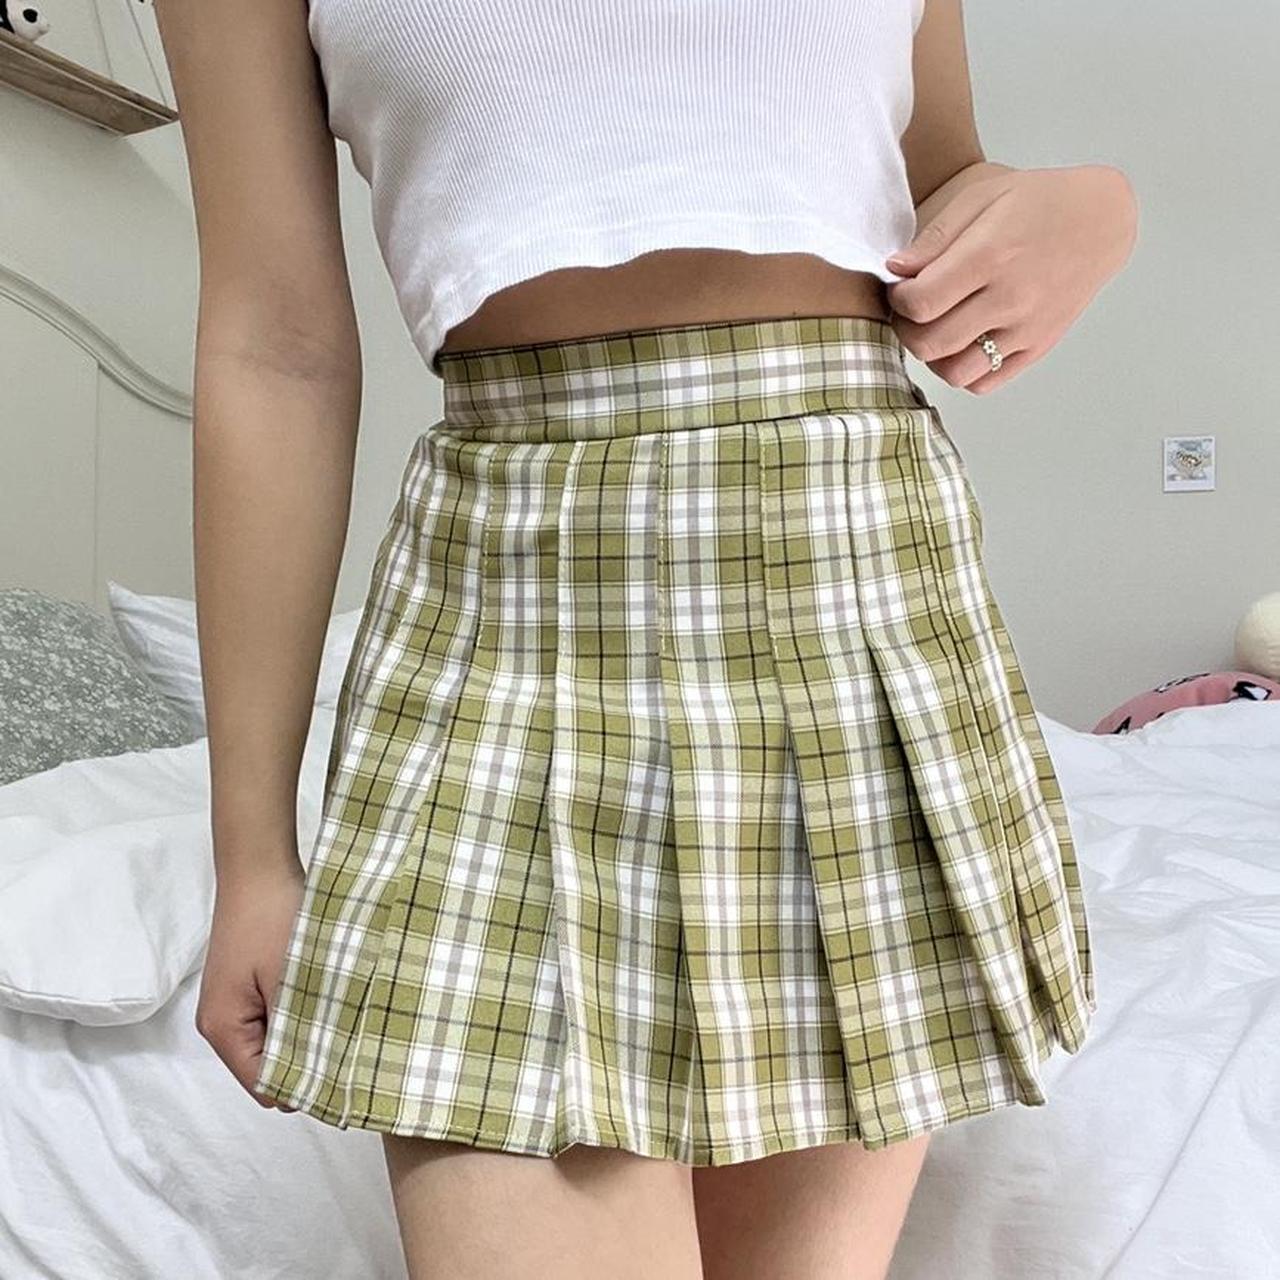 Princess Polly Green Plaid Mini Skirt The cutest... - Depop